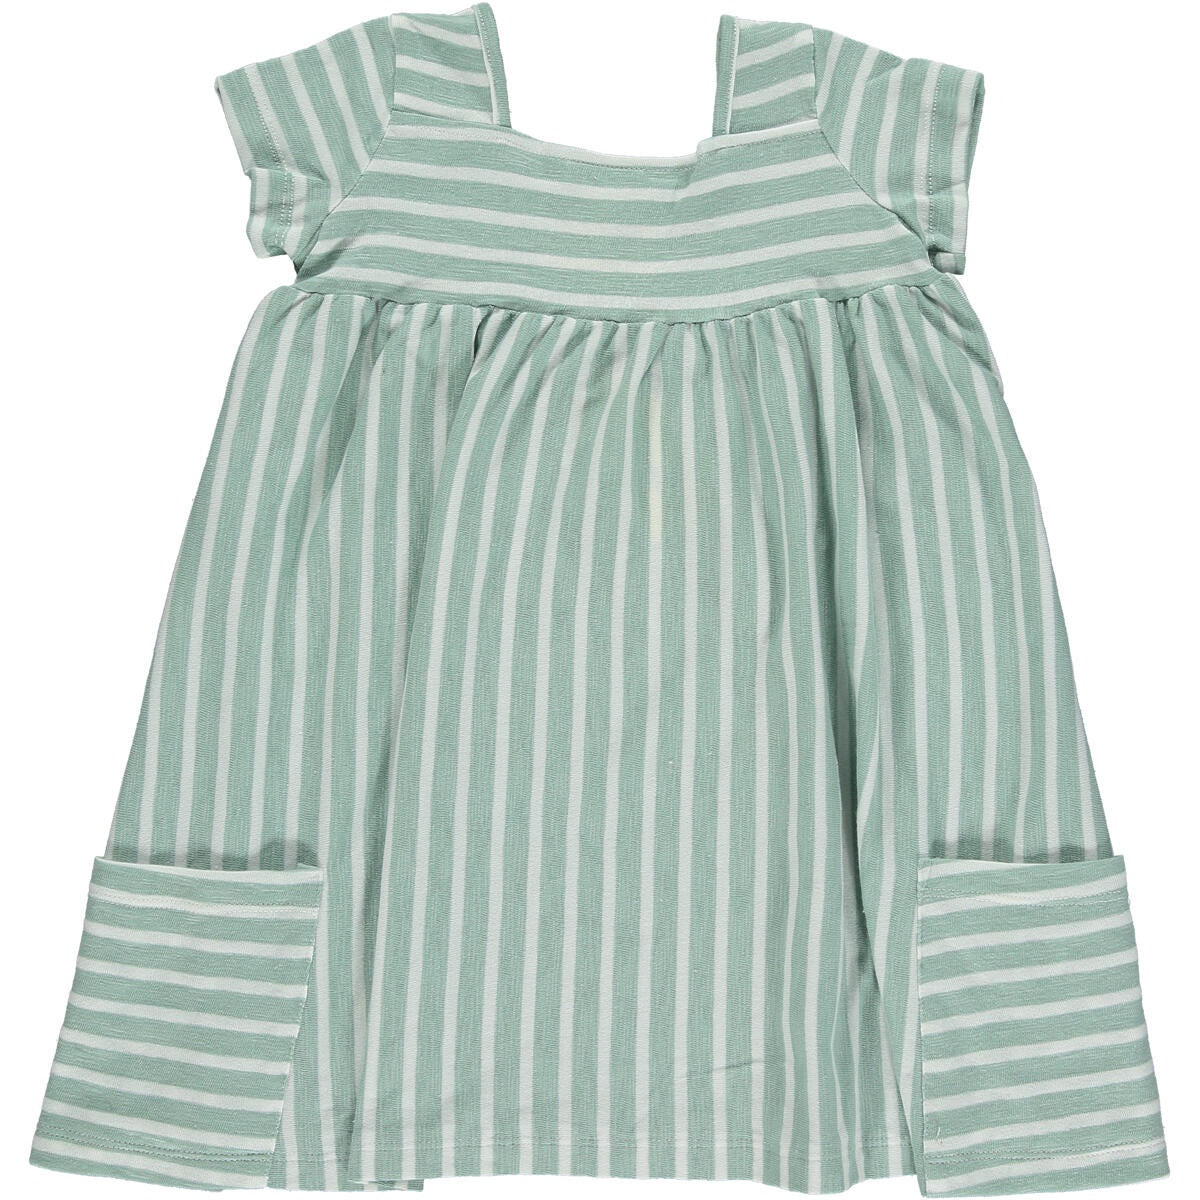 Vignette Rylie Dress Green/Ivory Stripe V1032 5102